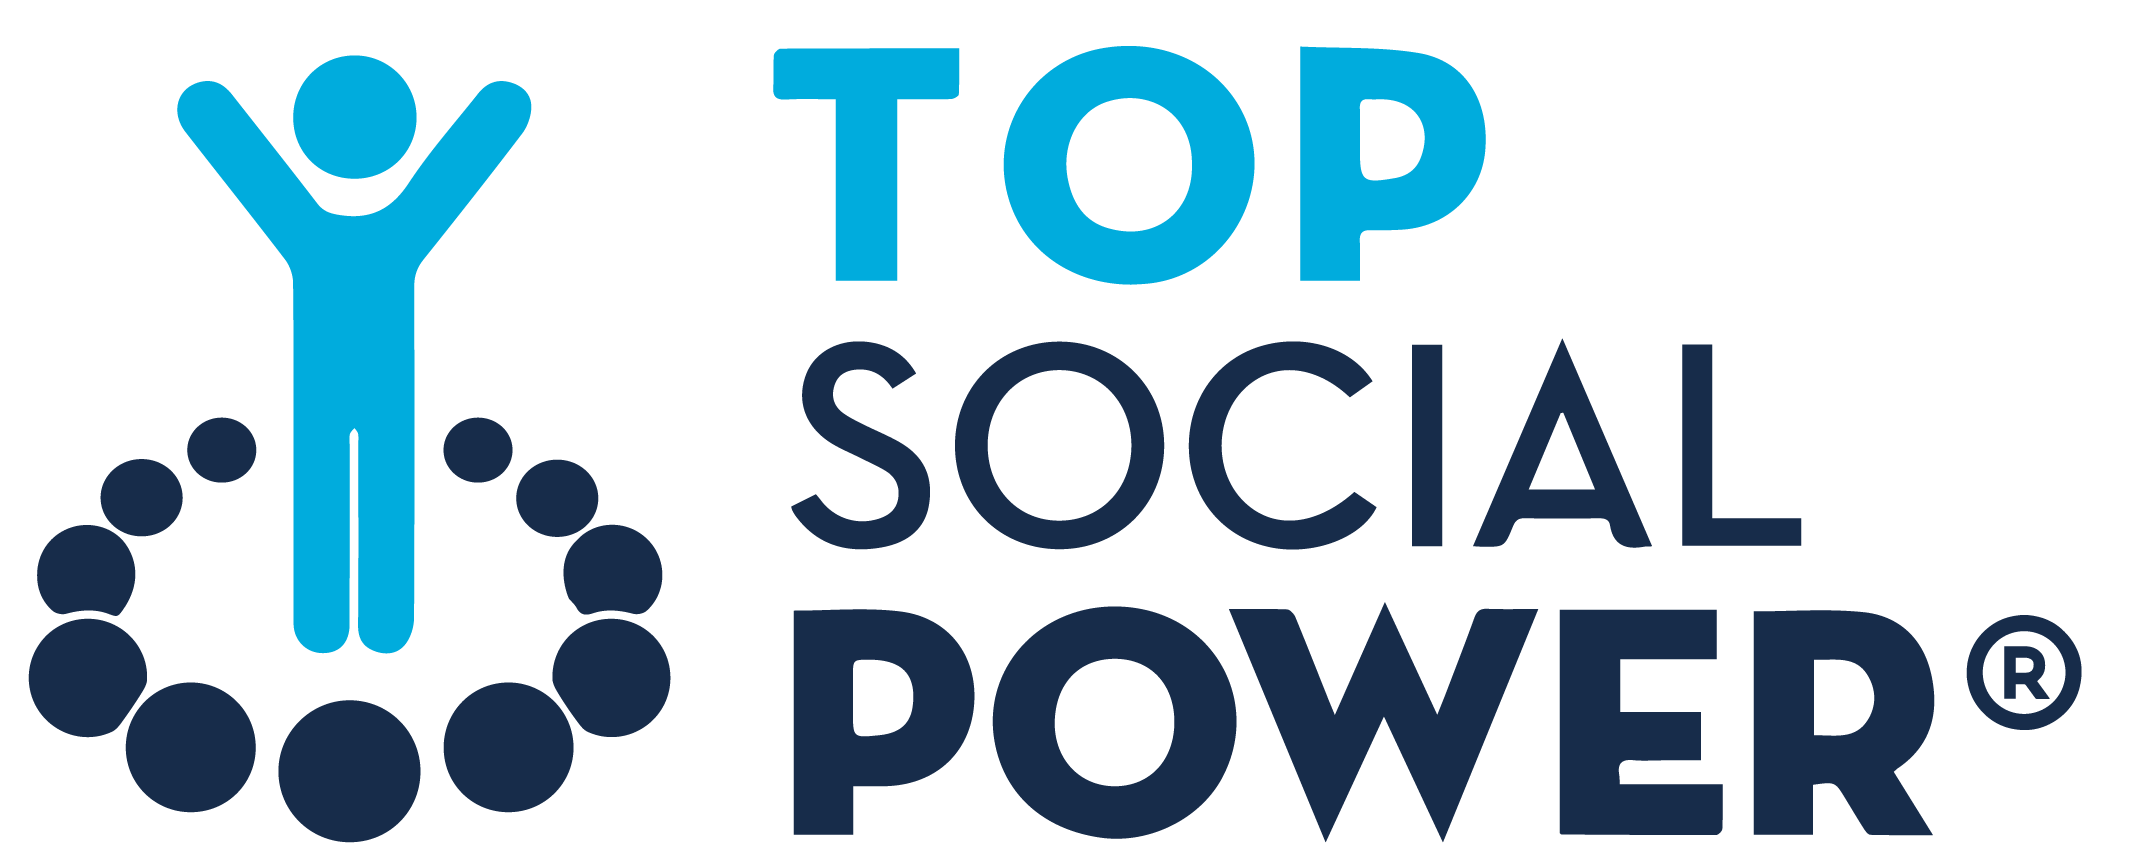 Top social power